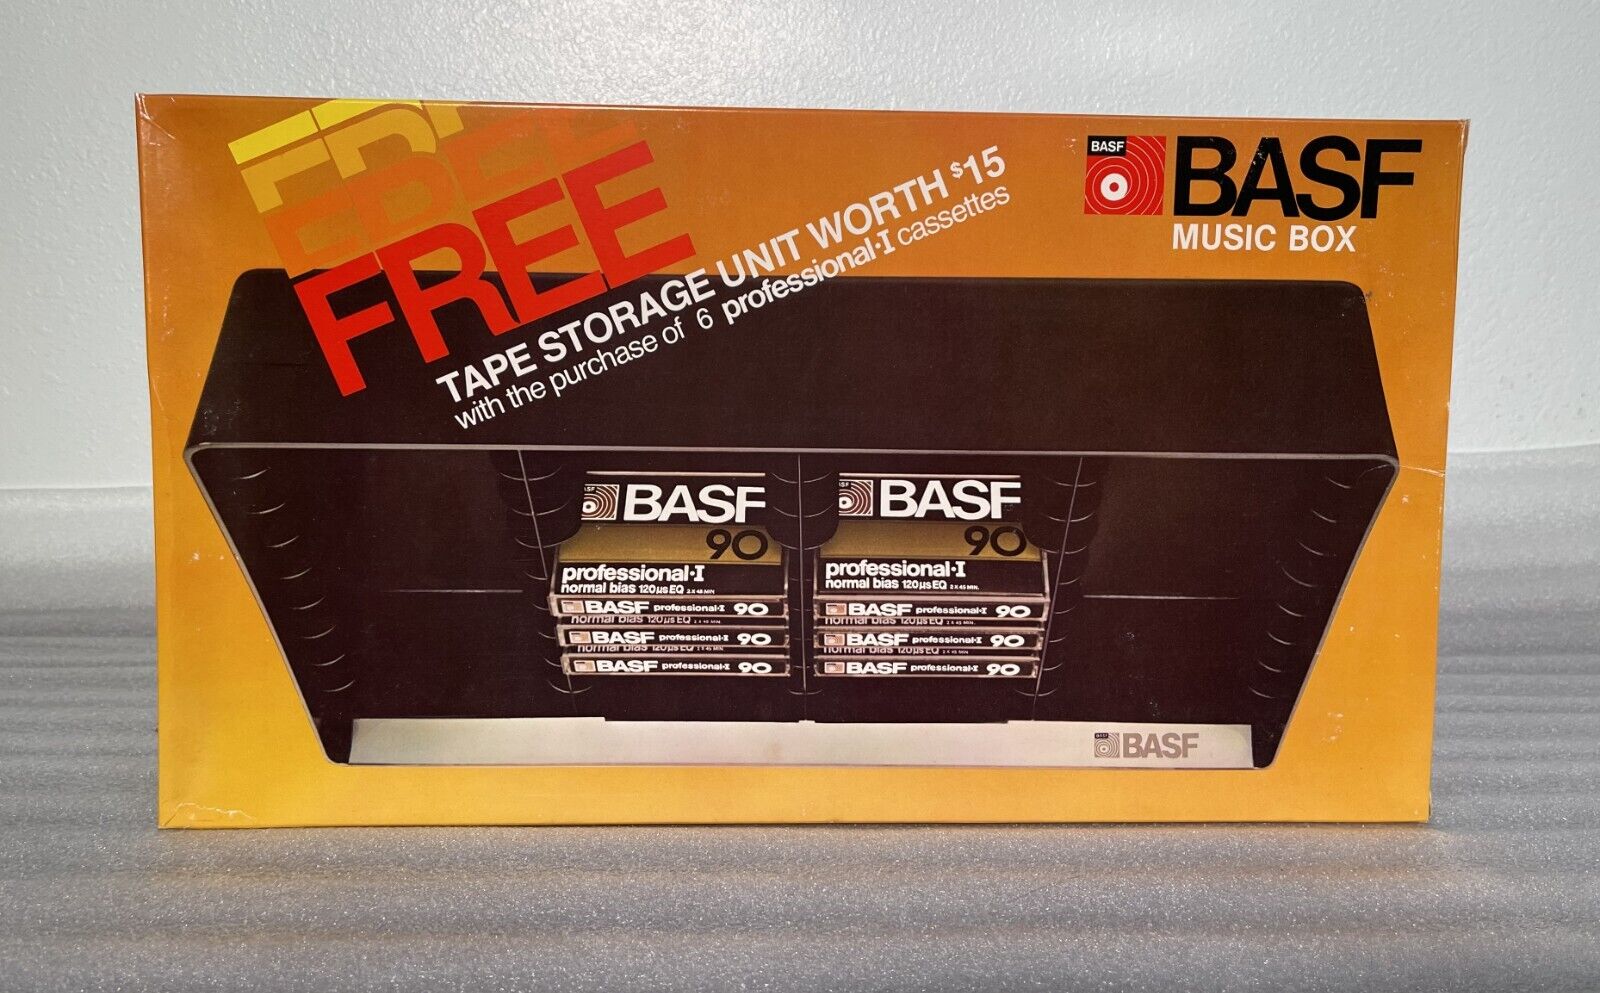 NOS BASF MUSIC BOX: 6 PROFESSIONAL I 90 MIN TYPE 1 CASSETTE TAPES + STORAGE UNIT